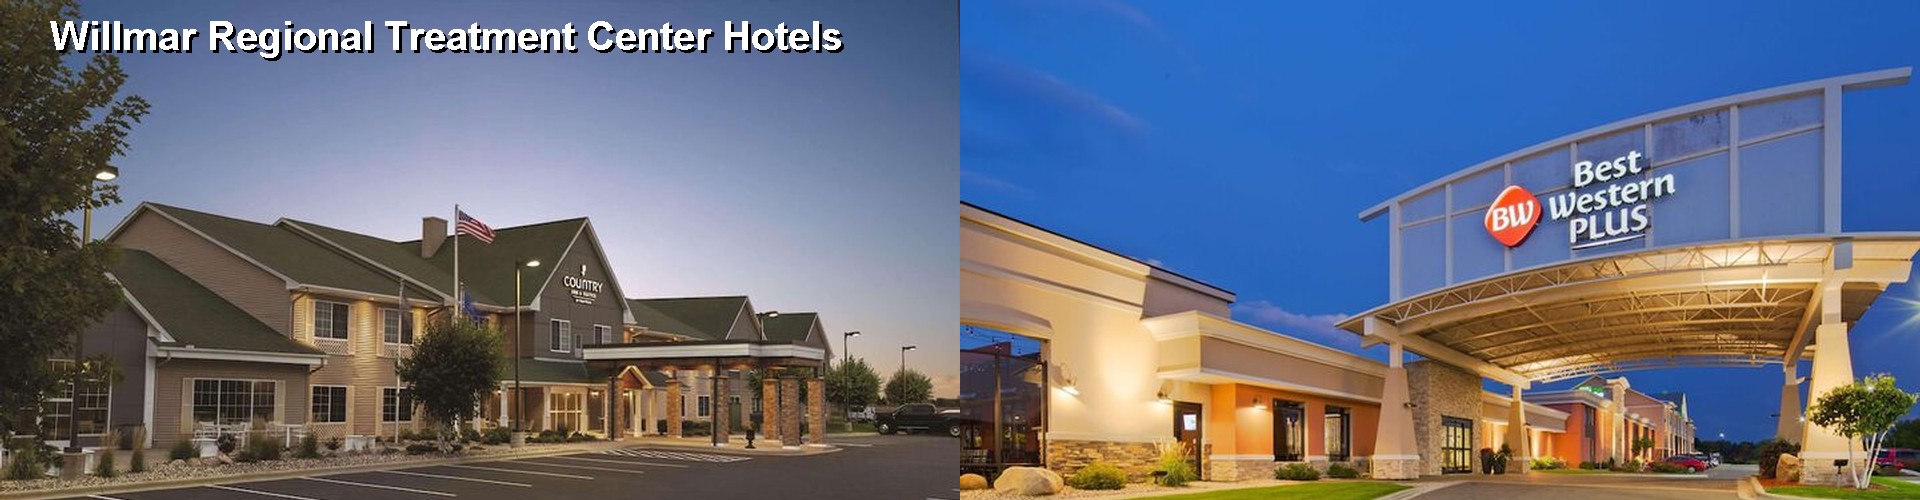 5 Best Hotels near Willmar Regional Treatment Center